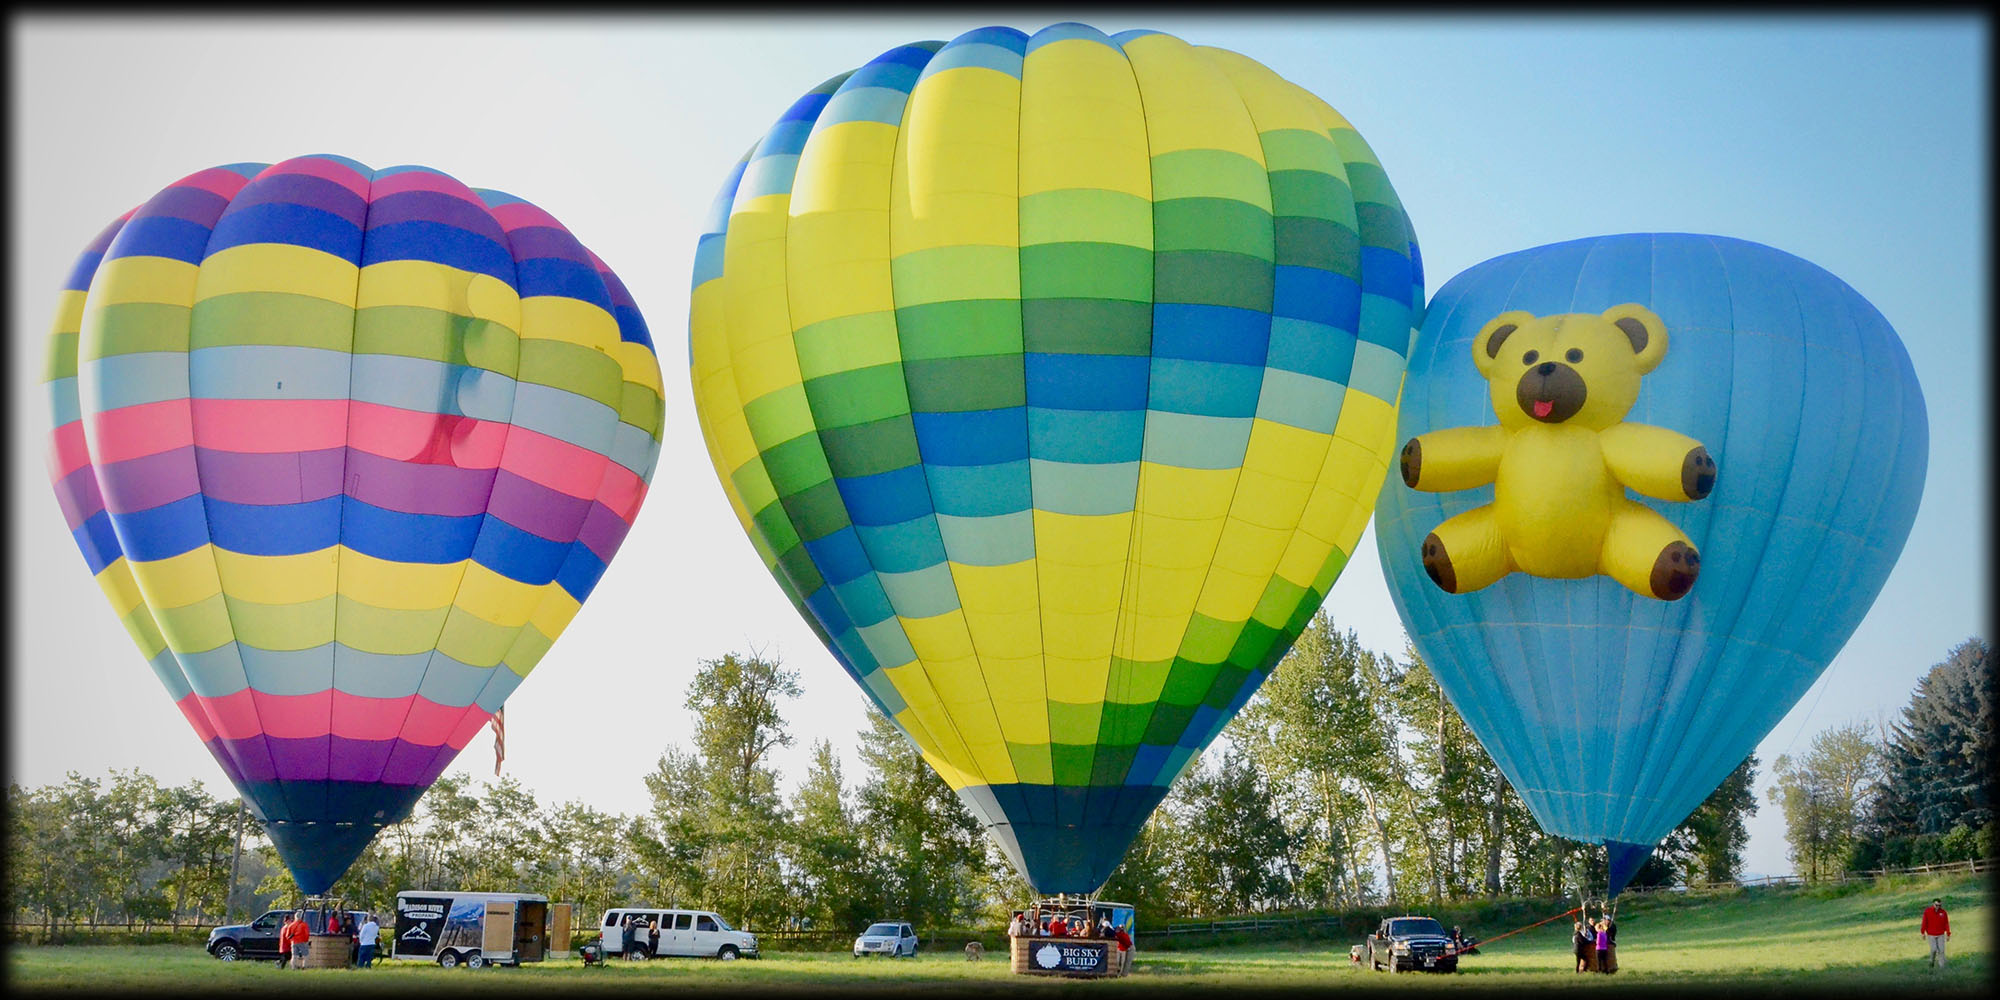 Fun And Colorful Shaped Hot Air Balloons